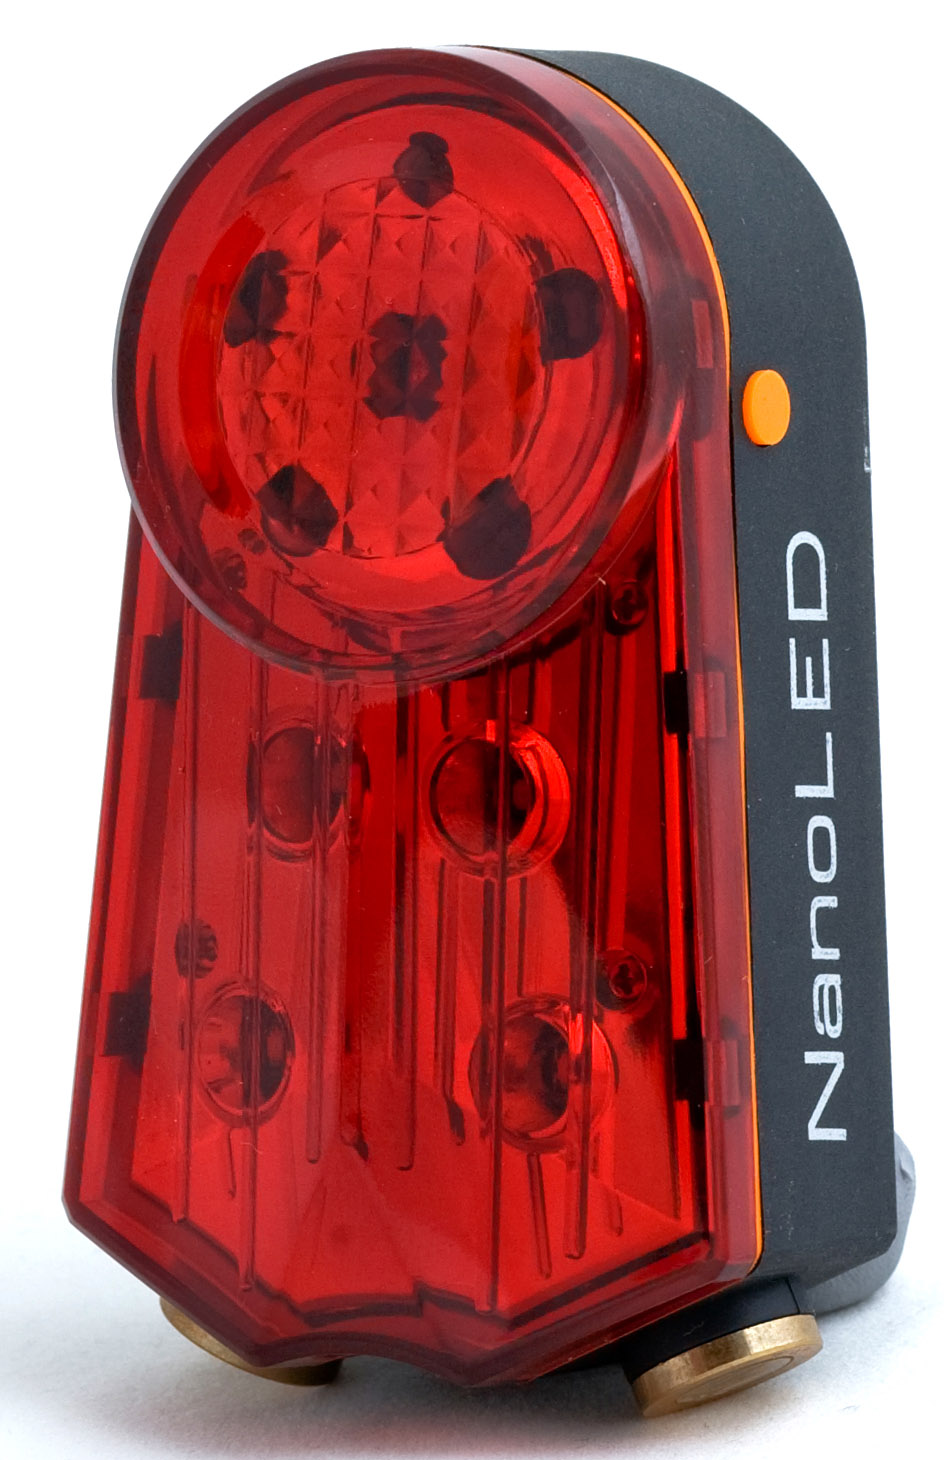  Задний фонарь для велосипеда UltraFire PRO-L10 2019